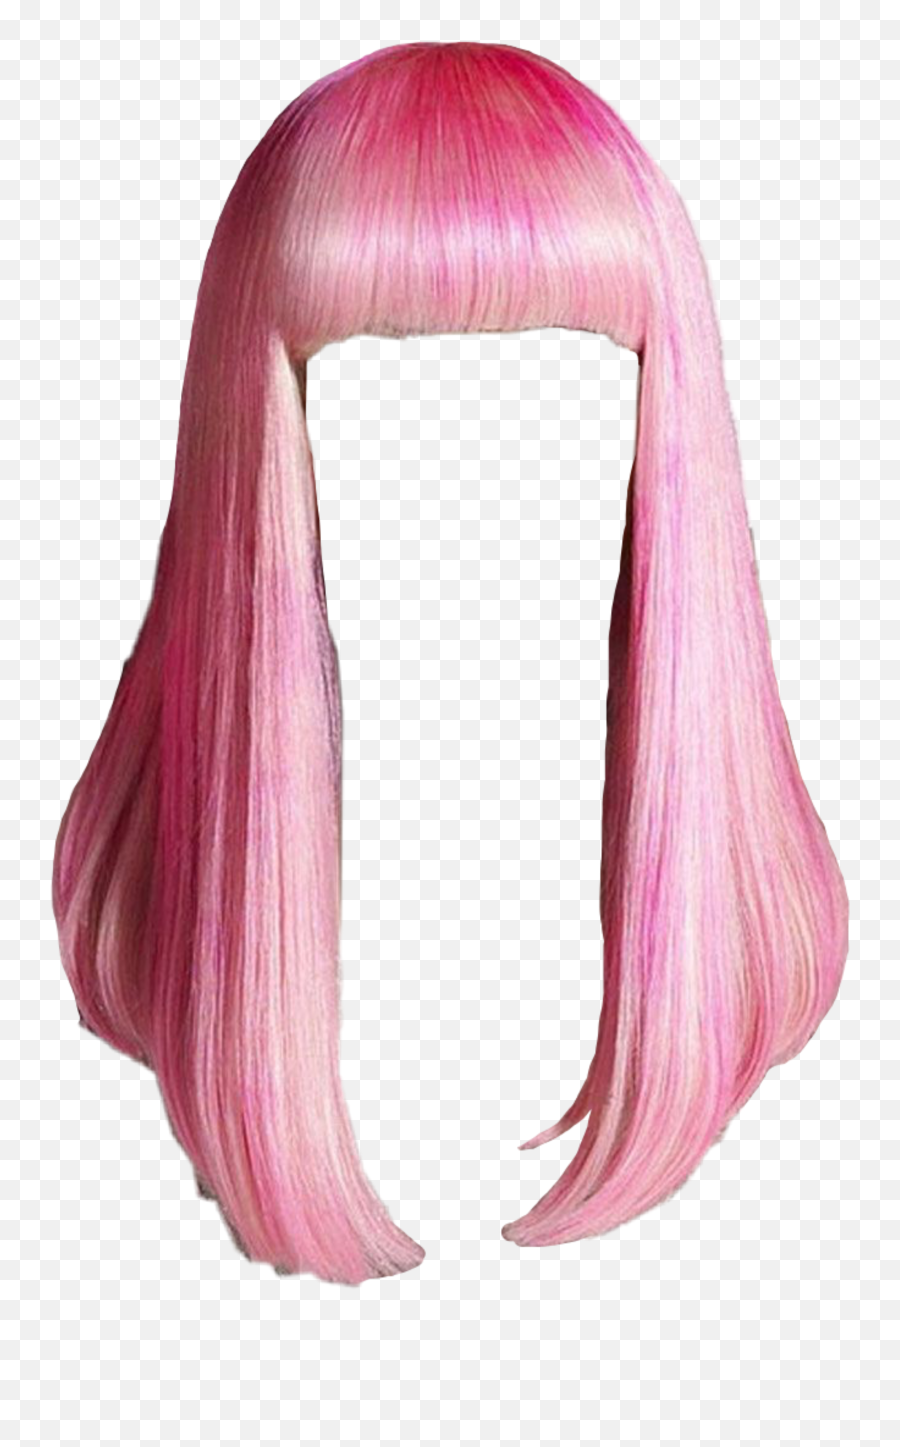 The Most Edited Mouth Picsart - Nicki Minaj Pink Wig Picsart Emoji,Mouthless Emoji